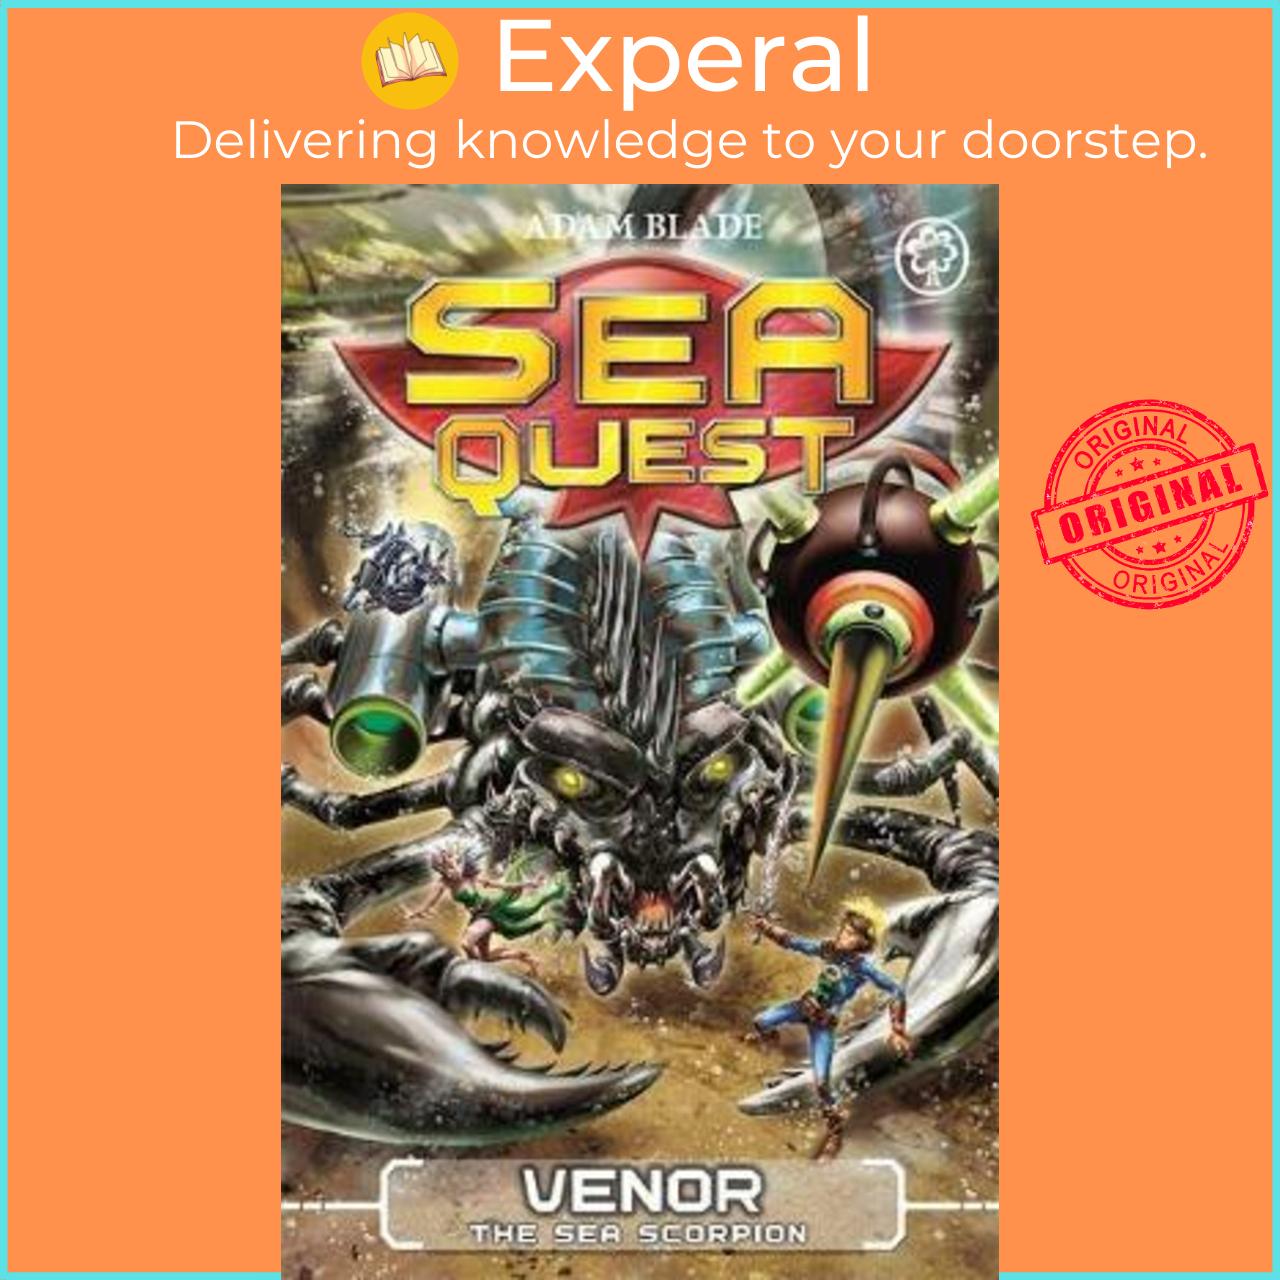 Sách - Sea Quest: Venor the Sea Scorpion : Book 19 by Adam Blade (UK edition, paperback)